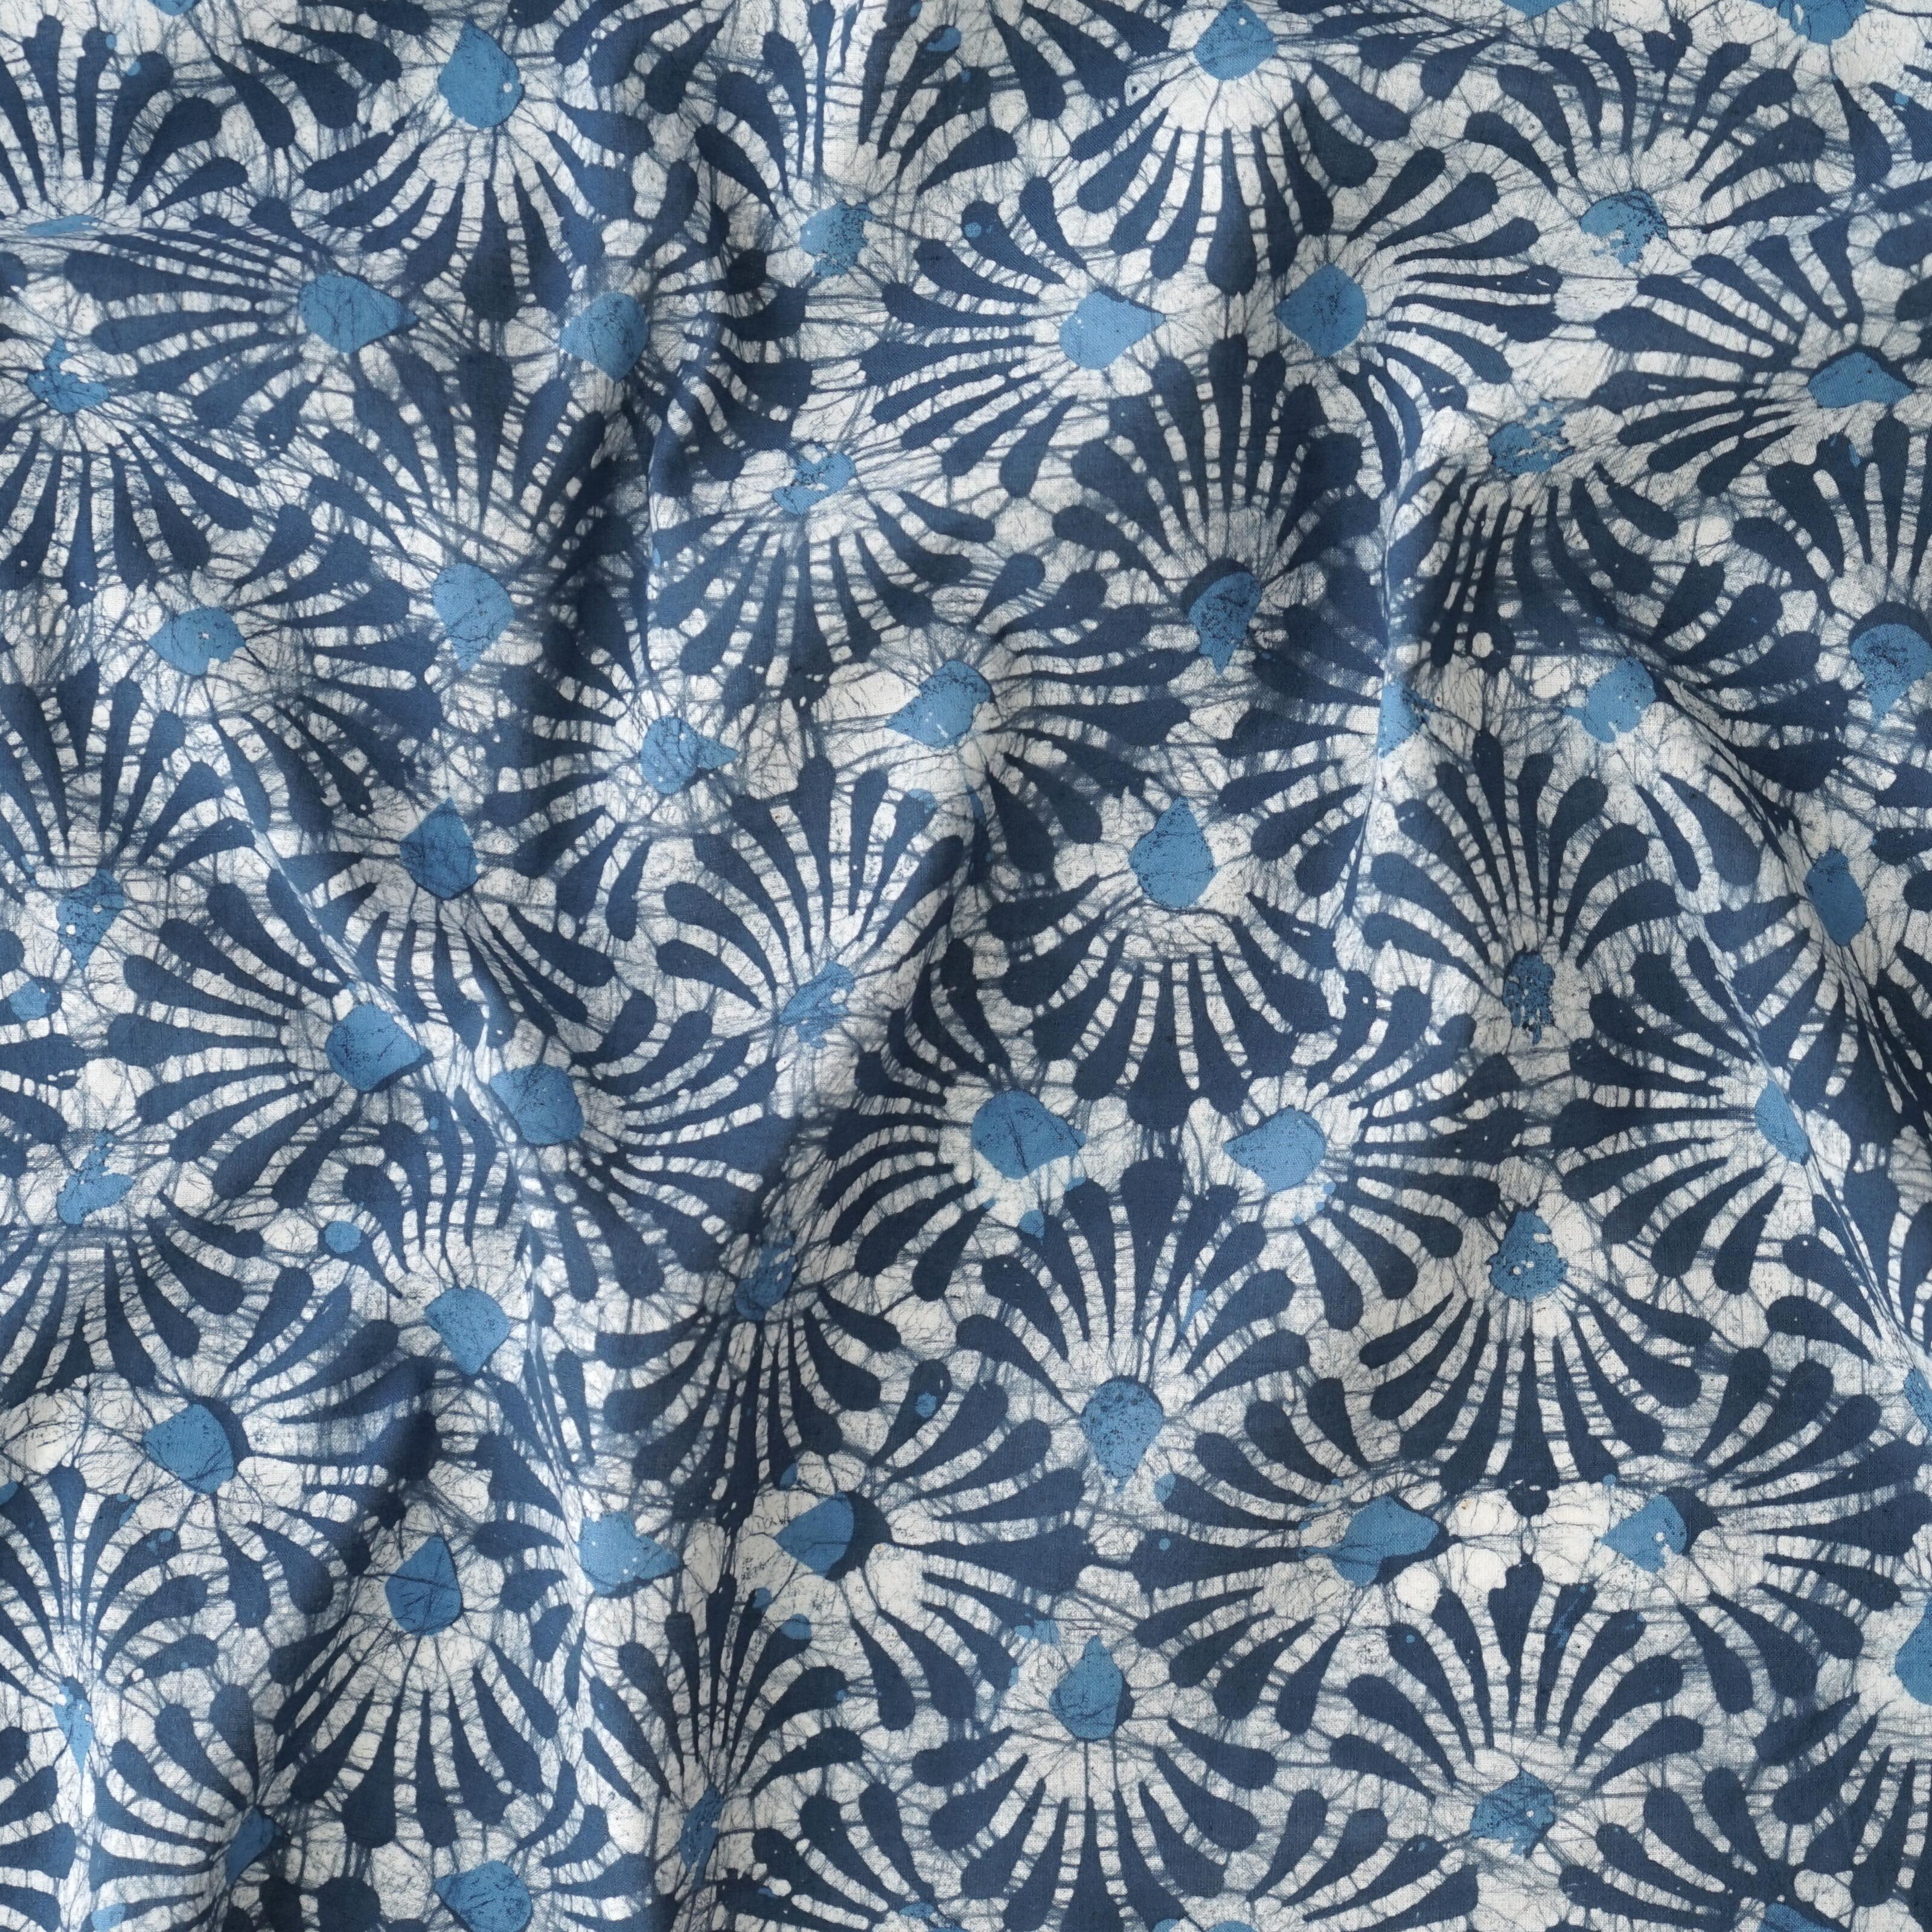 Block-Printed Batik Fabric - Cotton Cloth - Reactive Dyes - Splash Design - Contrast